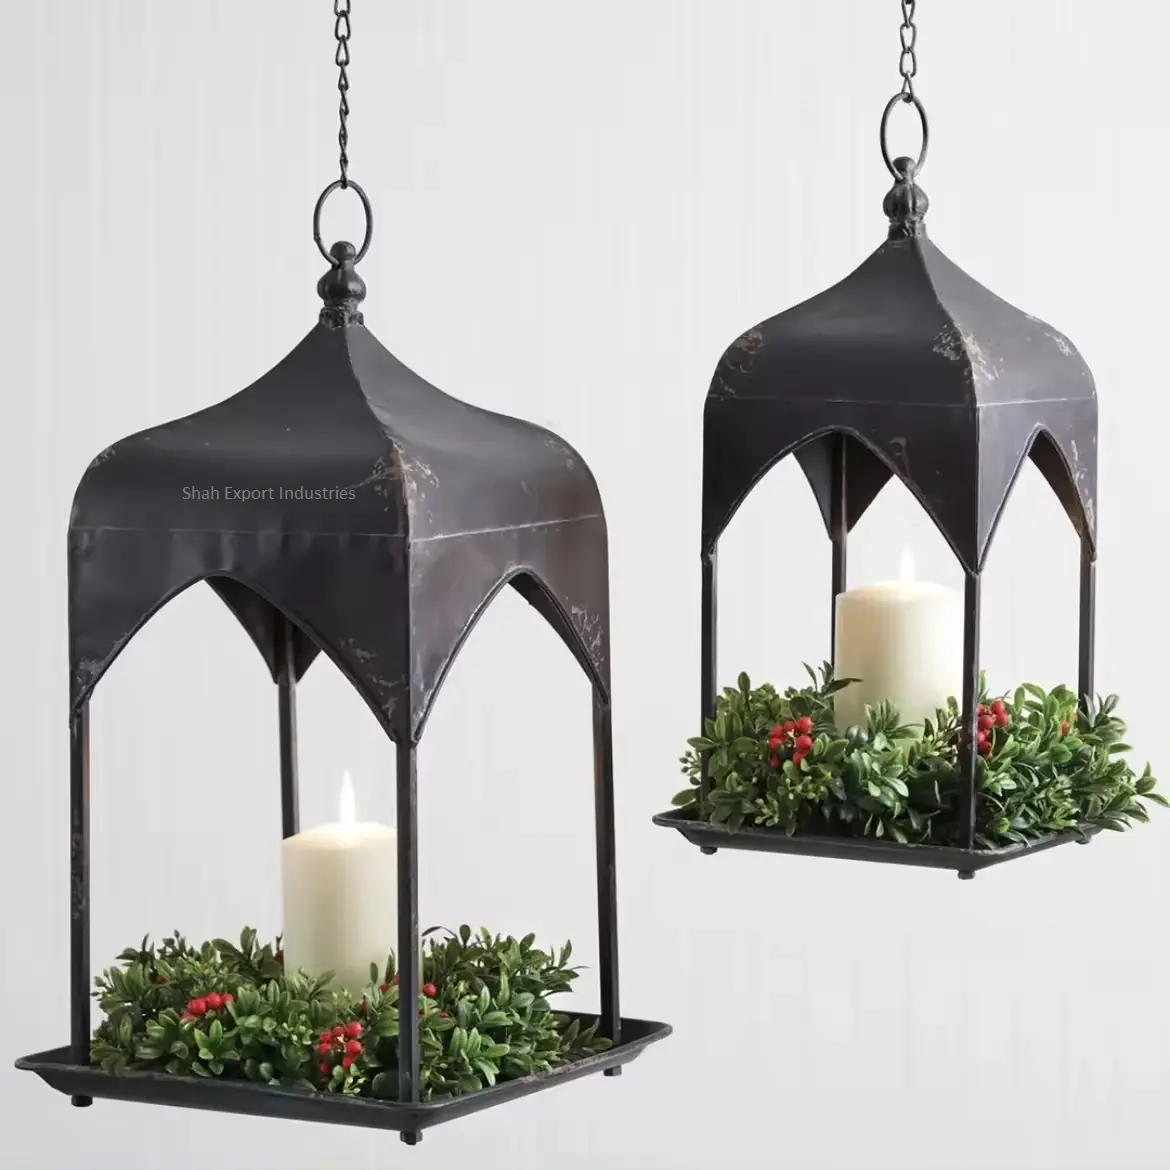 Christmas Decorative Black Metal Candle Lantern Handmade for Home and Garden Lighting Decor Hanging Lanterns